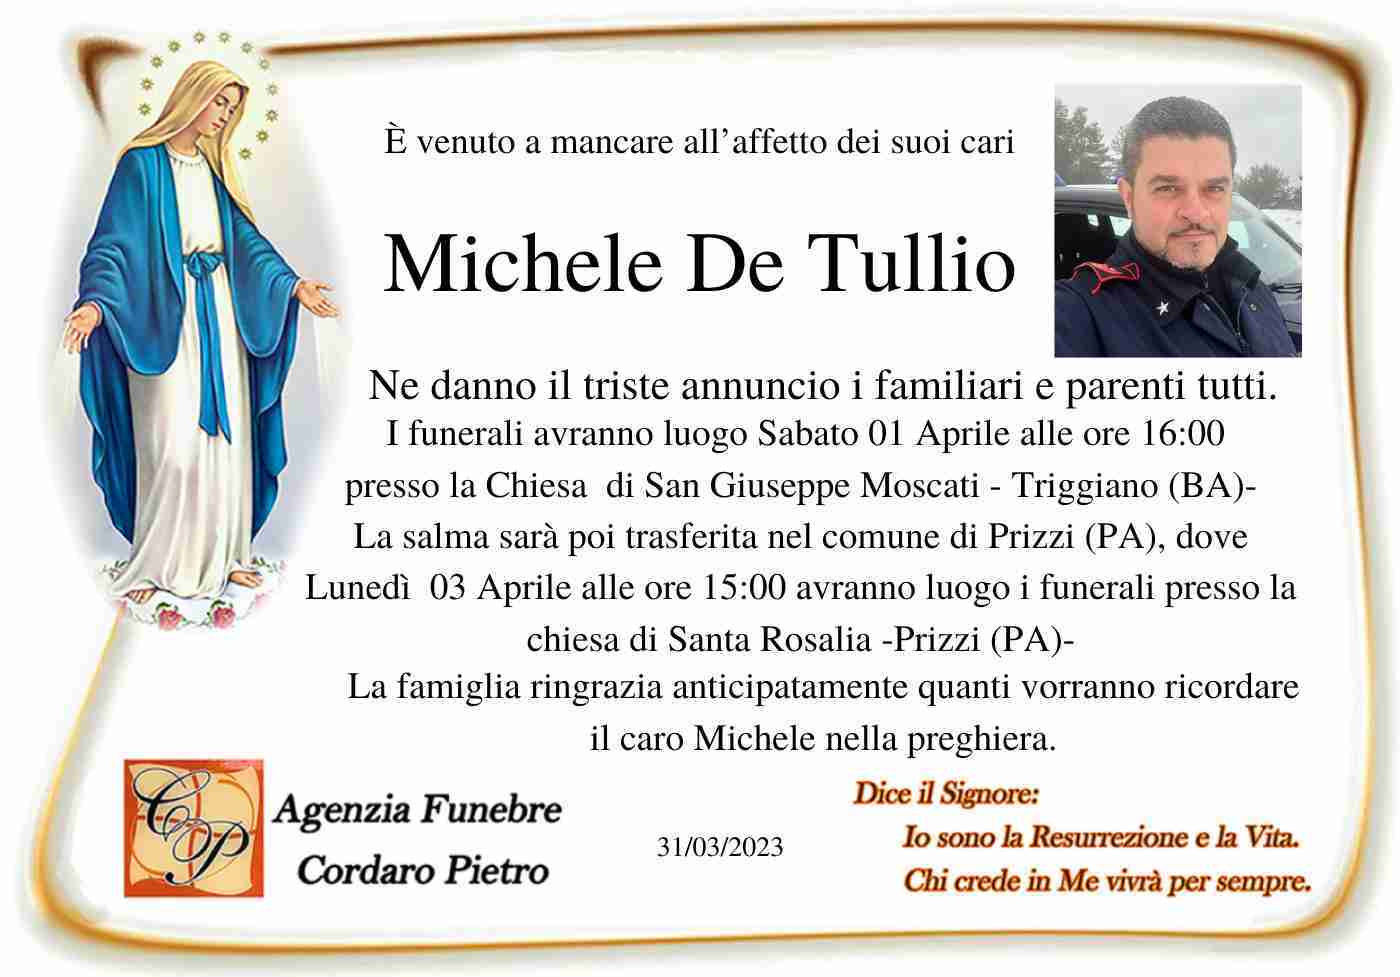 Michele De Tullio